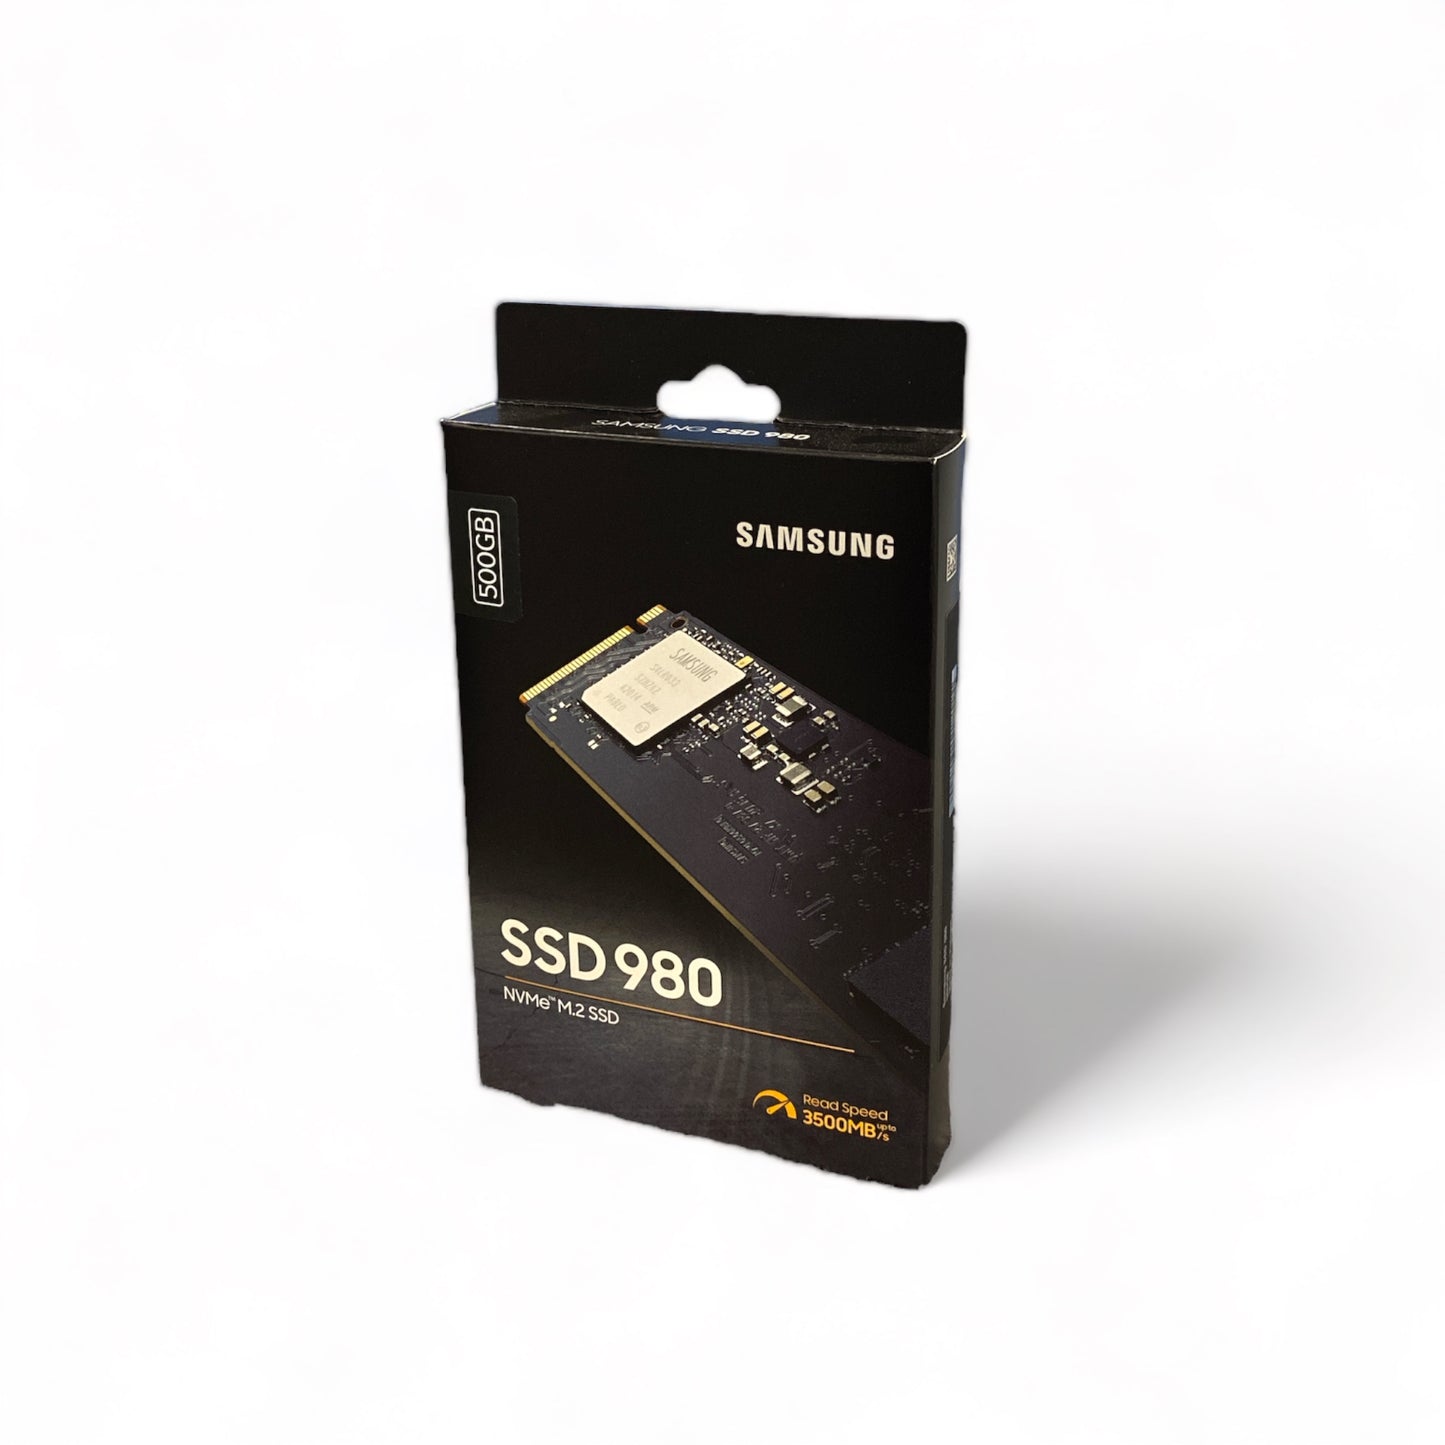 SAMSUNG SSD 980 M.2  500 GB